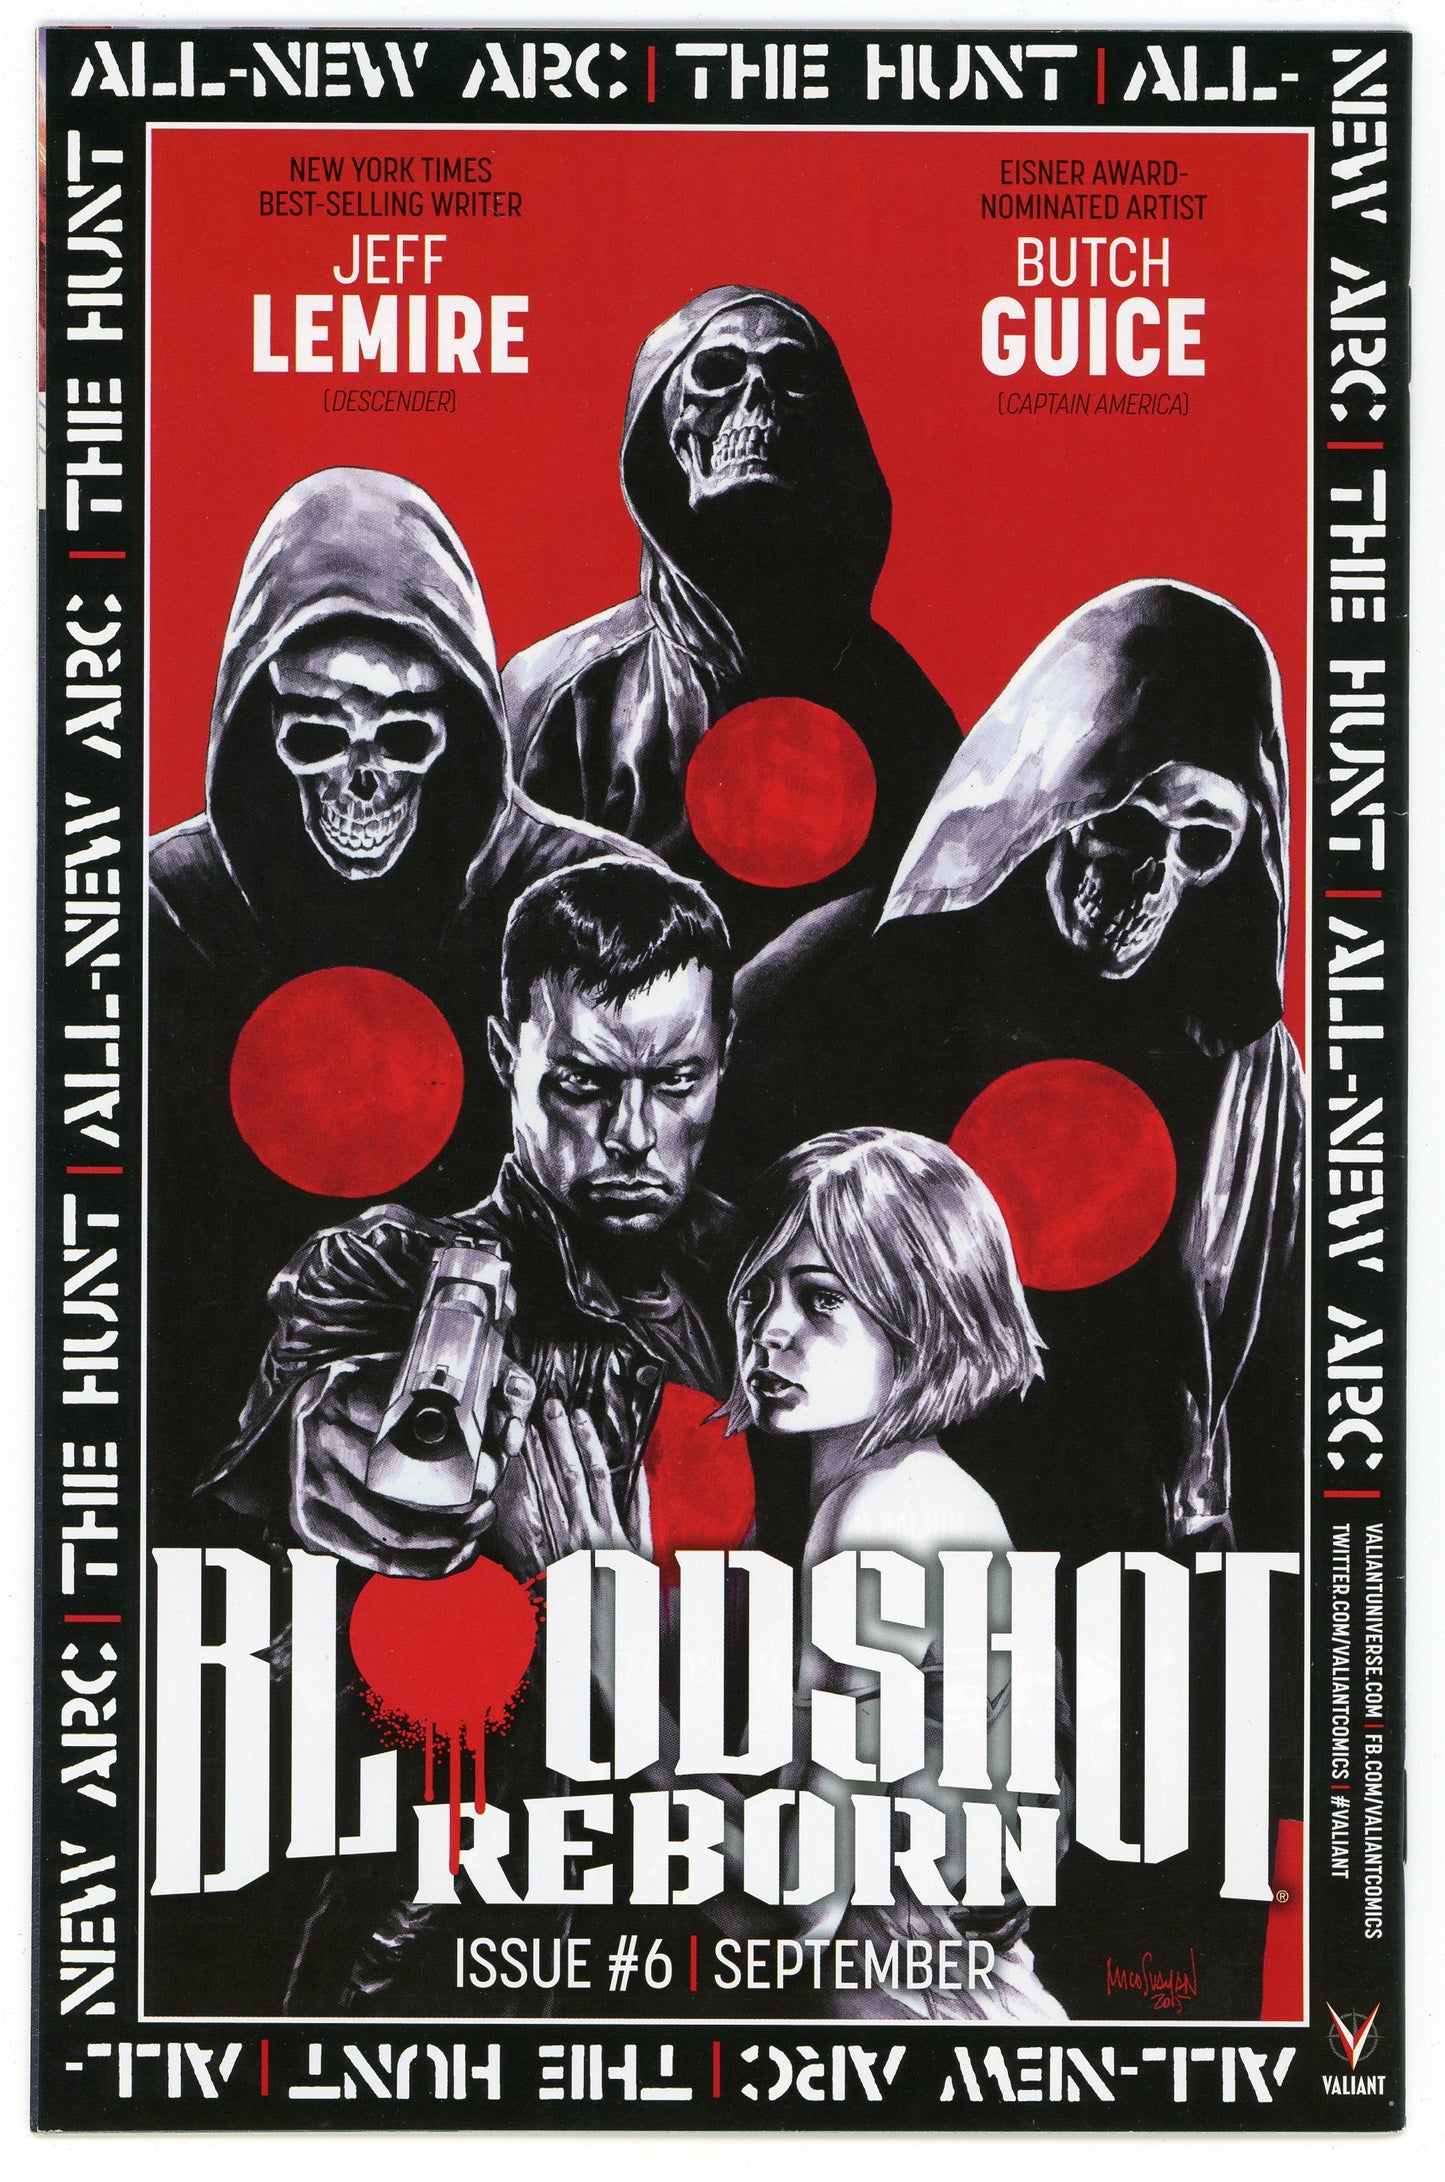 Bloodshot Reborn No. 5